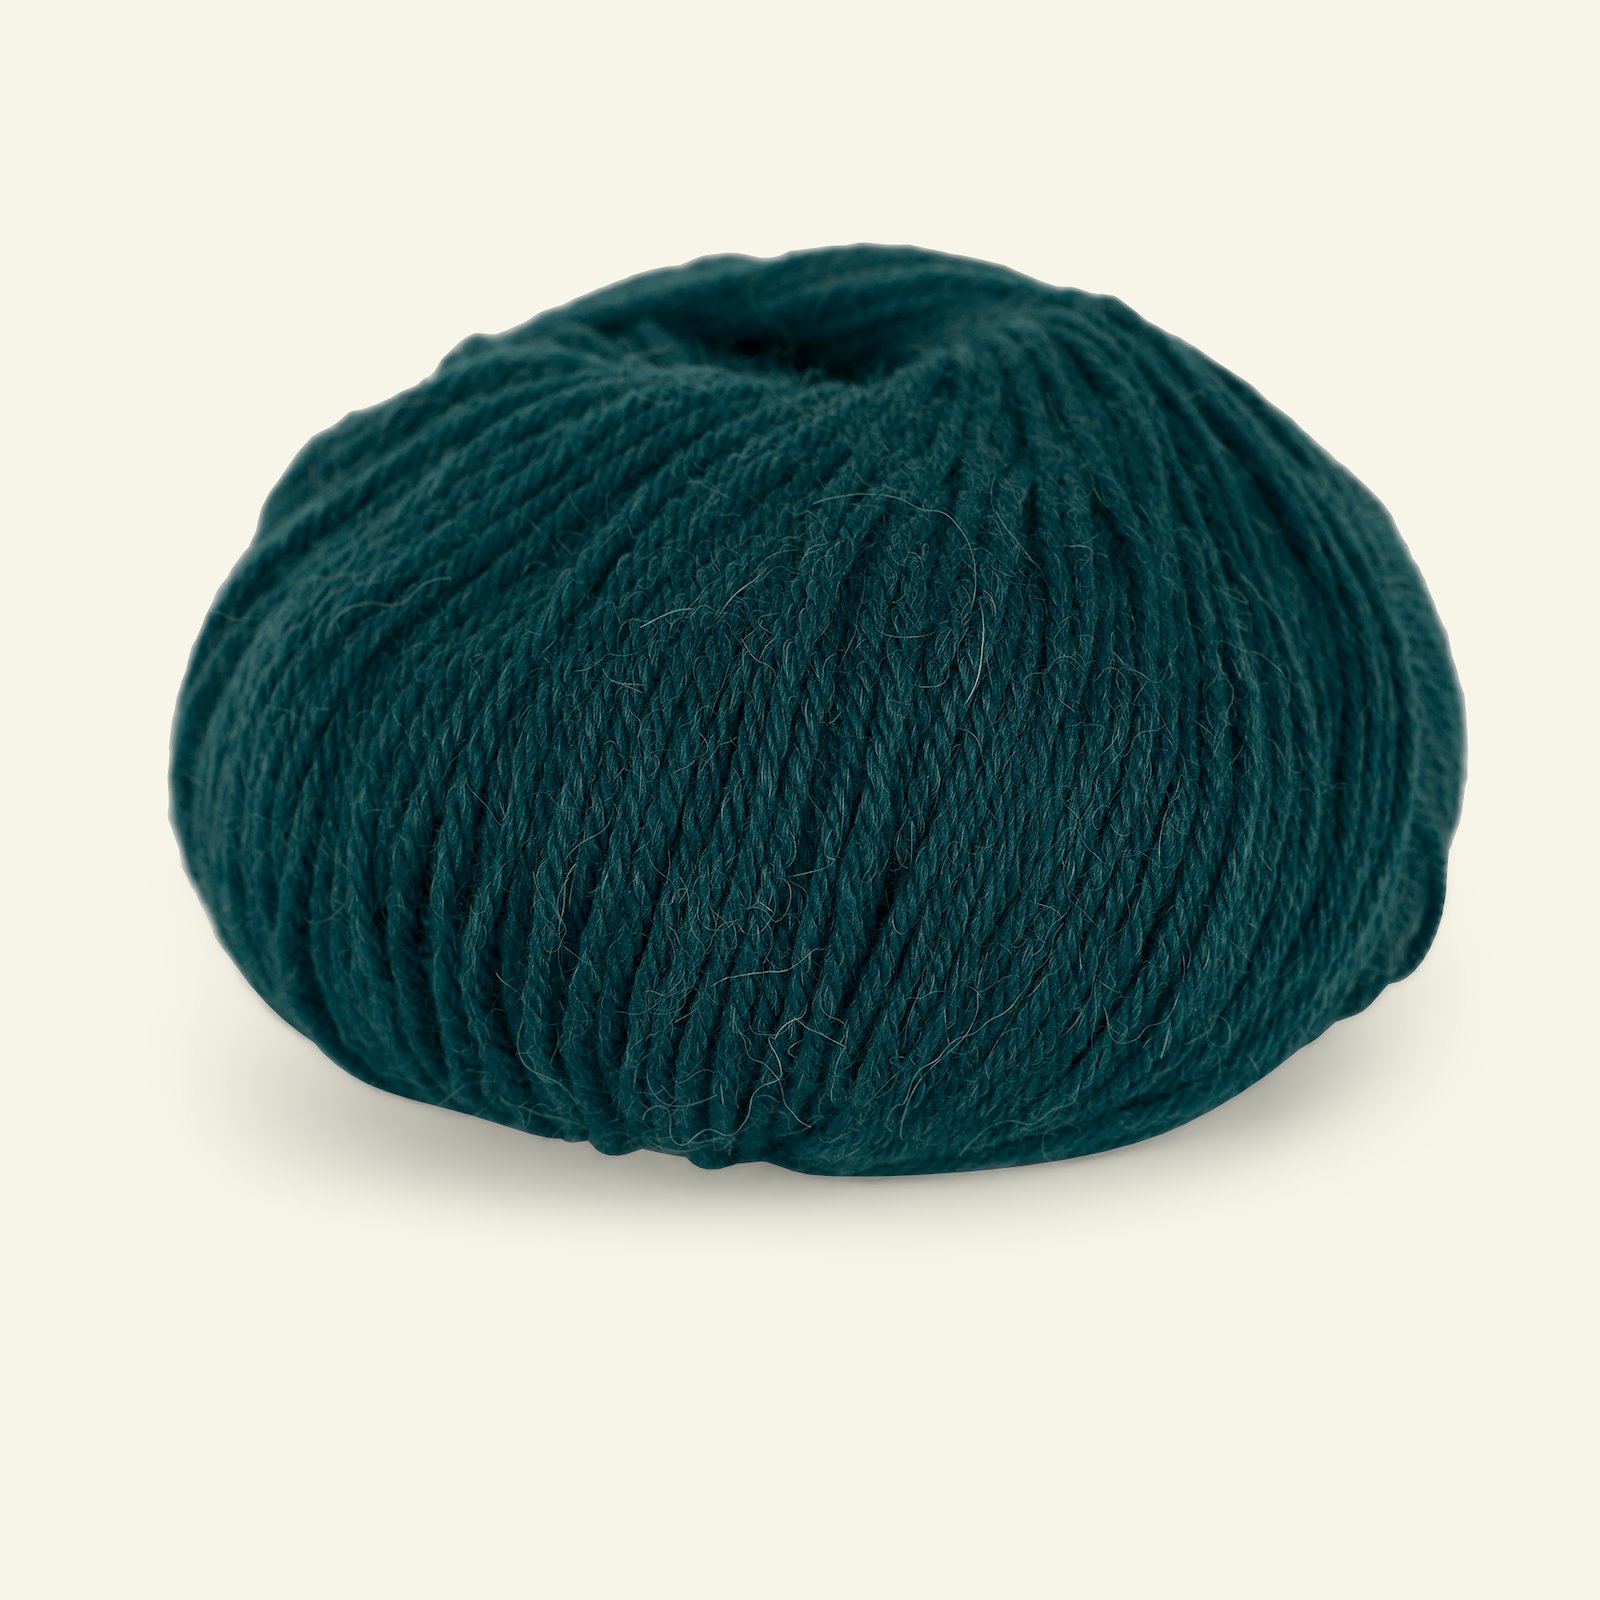 Du Store Alpakka, alpaca merino mixed yarn "Sterk", spruce green (906) 90000698_pack_b